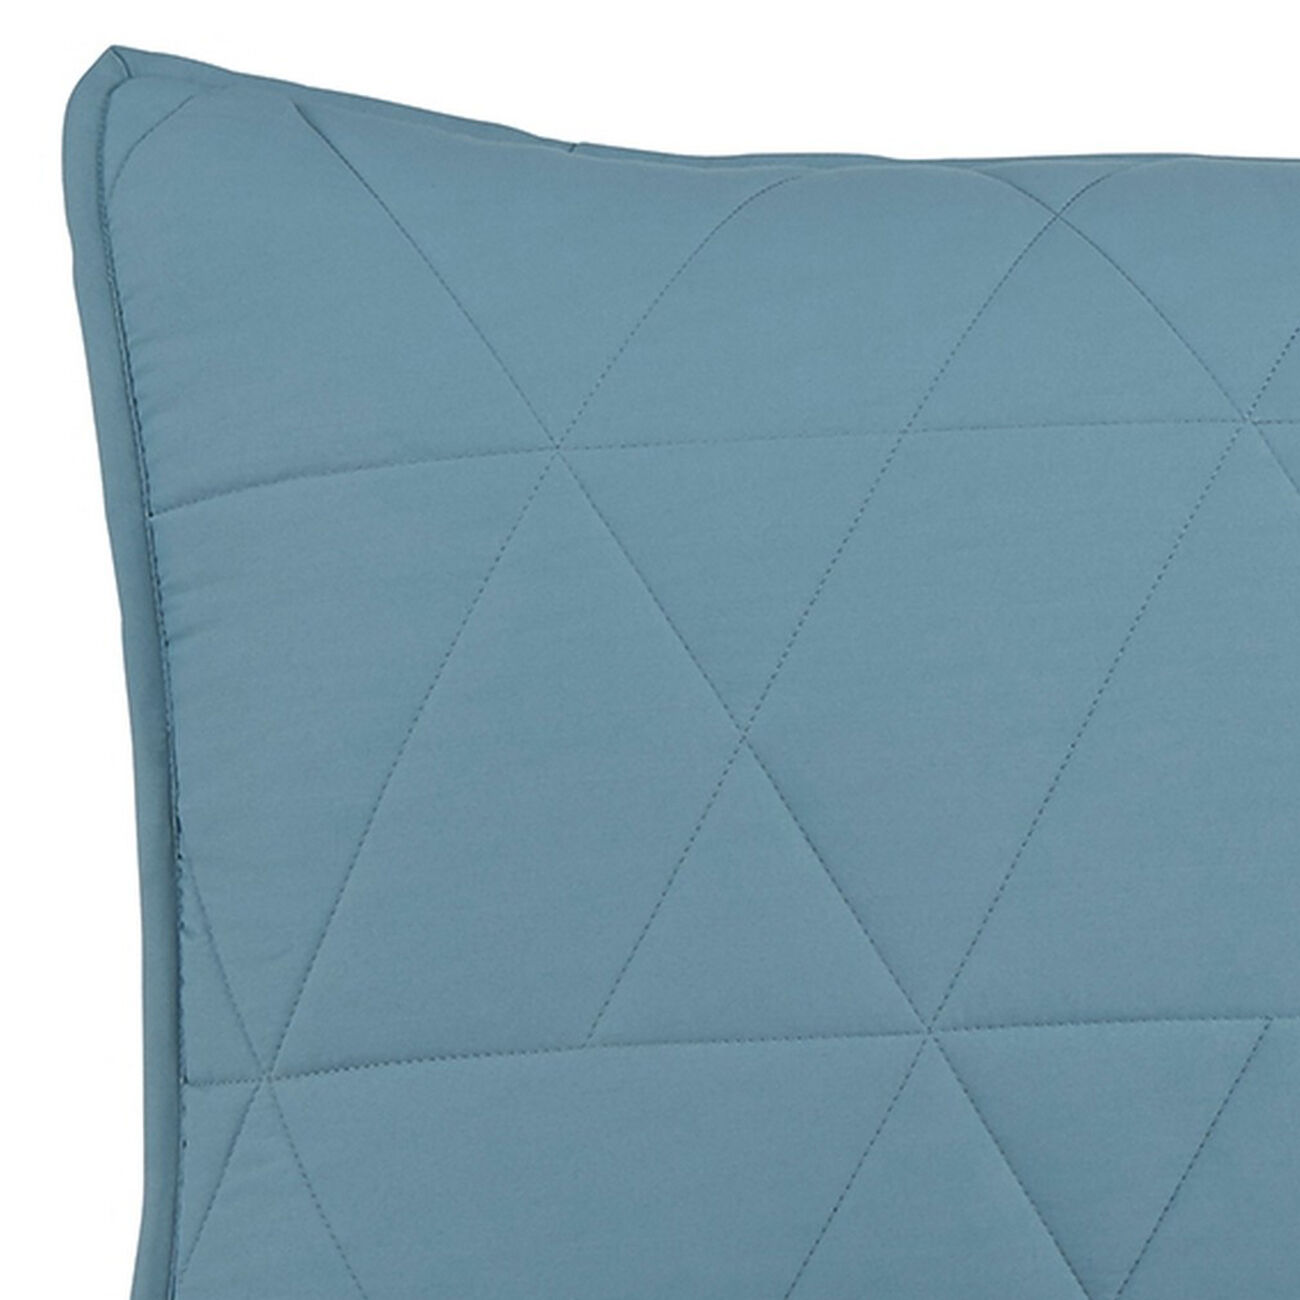 Geometrically stitched Twin Size Fabric Comforter set with 1 Sham, Blue